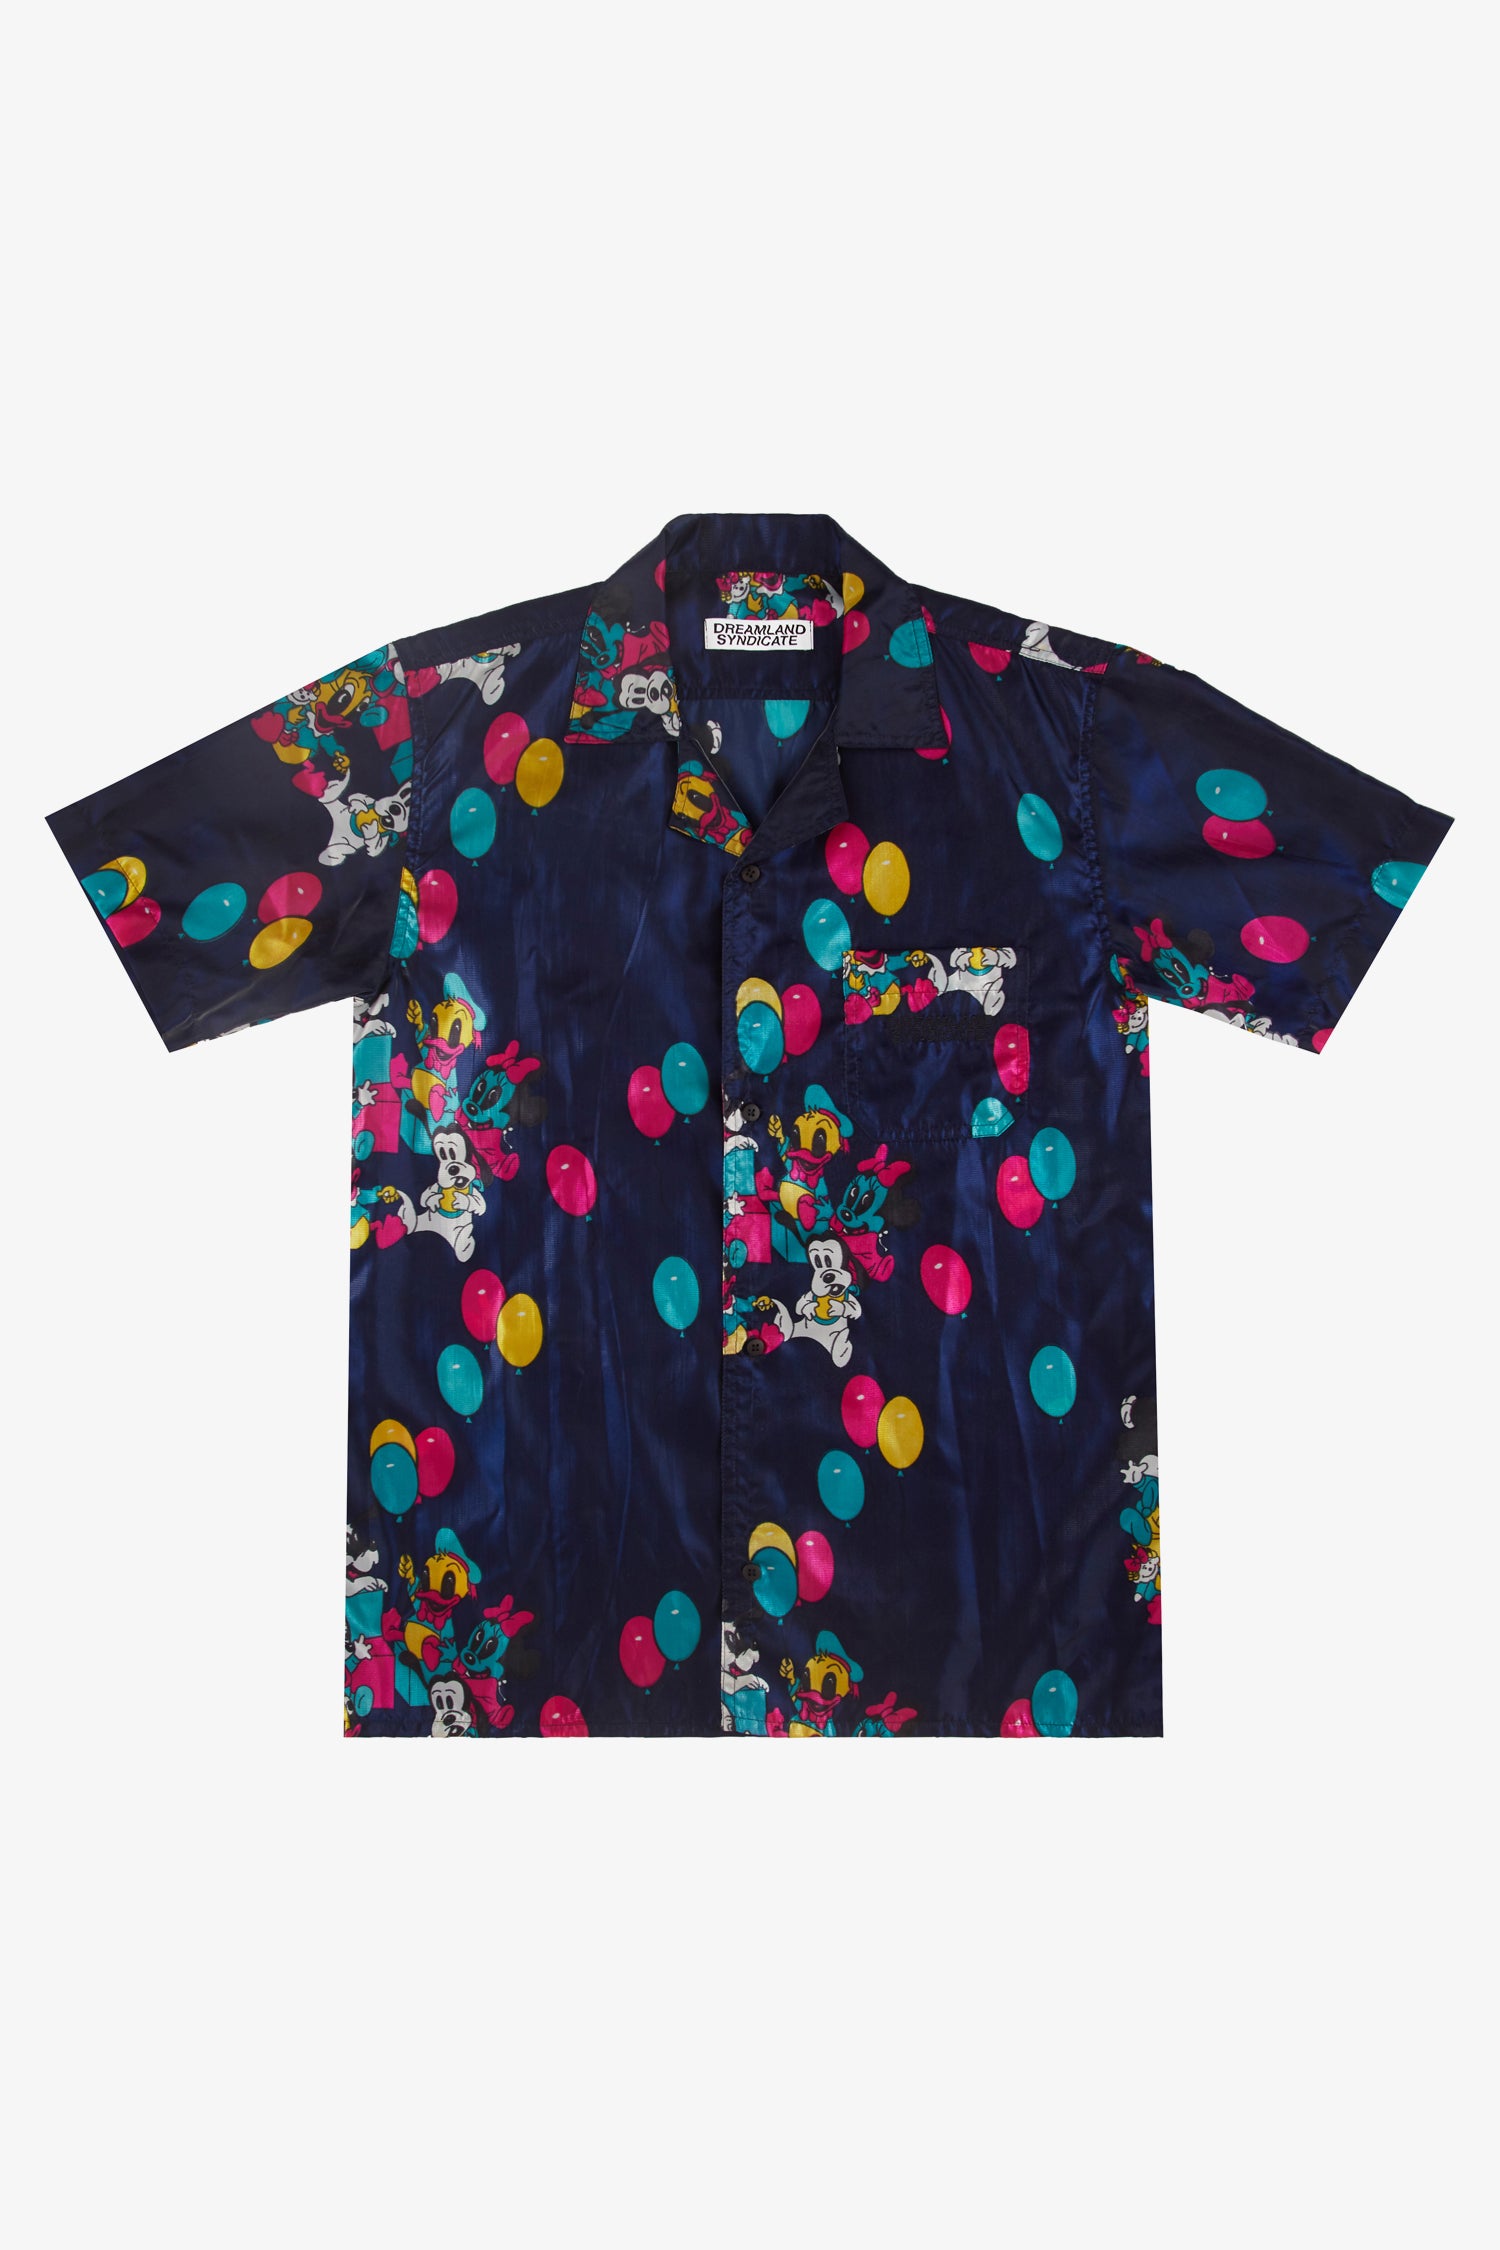 Selectshop FRAME - DREAMLAND SYNDICATE Nightstomp Shirt Shirt Dubai